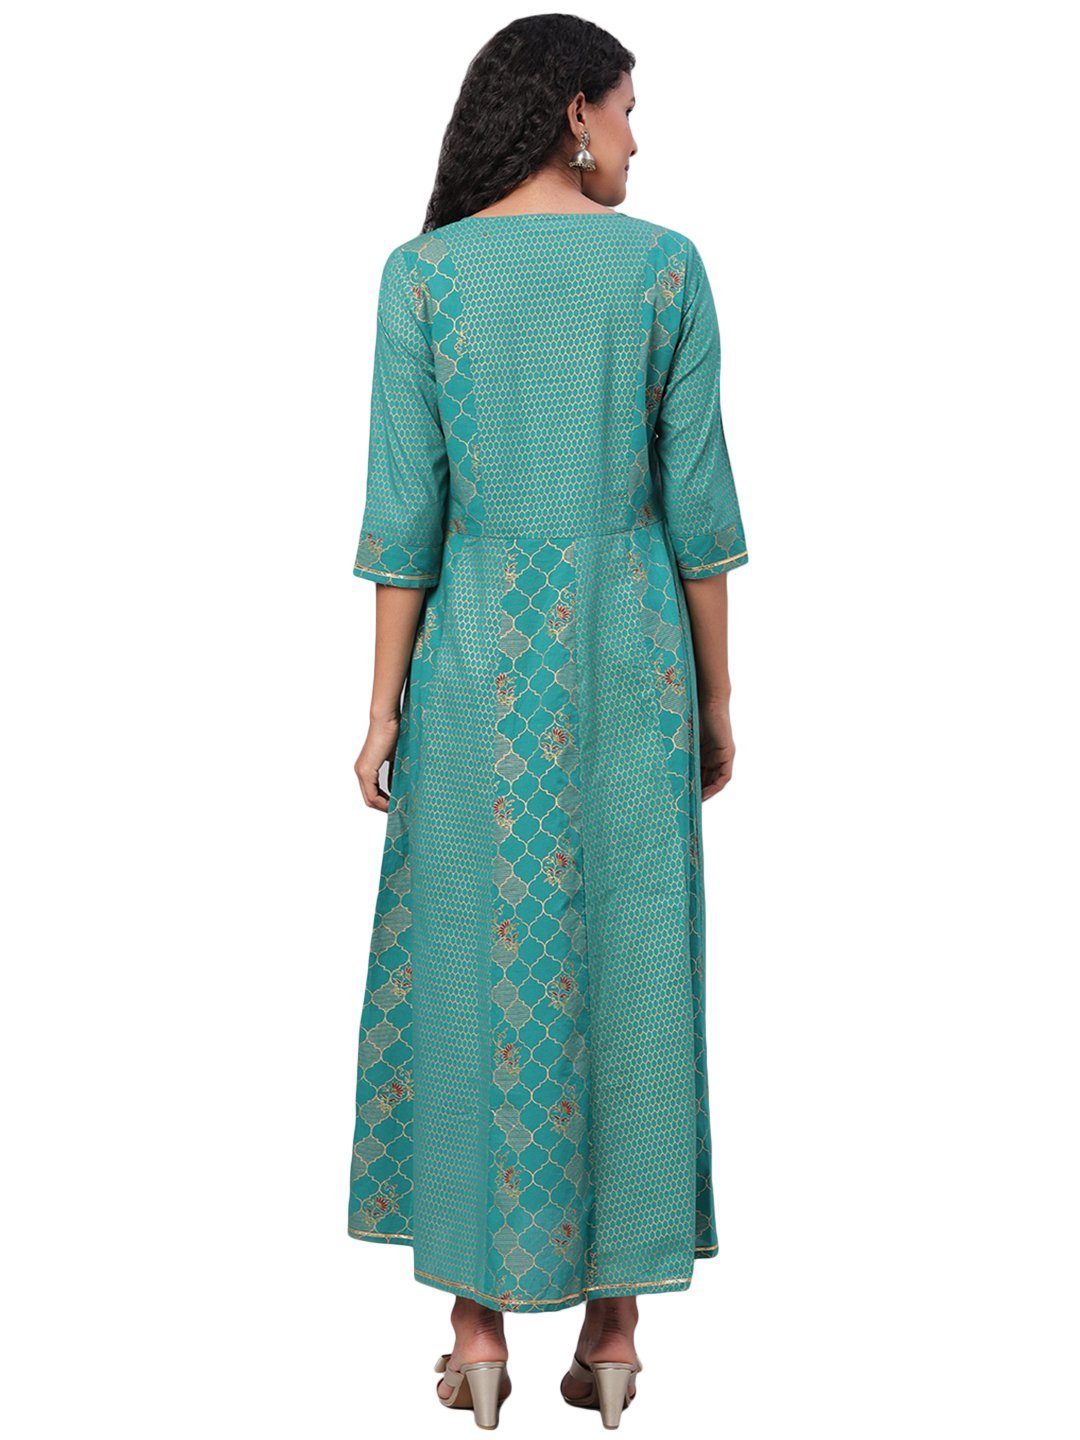 Women's Green Printed 3/4 Sleeve Cotton Round Neck Casual Anarkali Kurta Only - Myshka